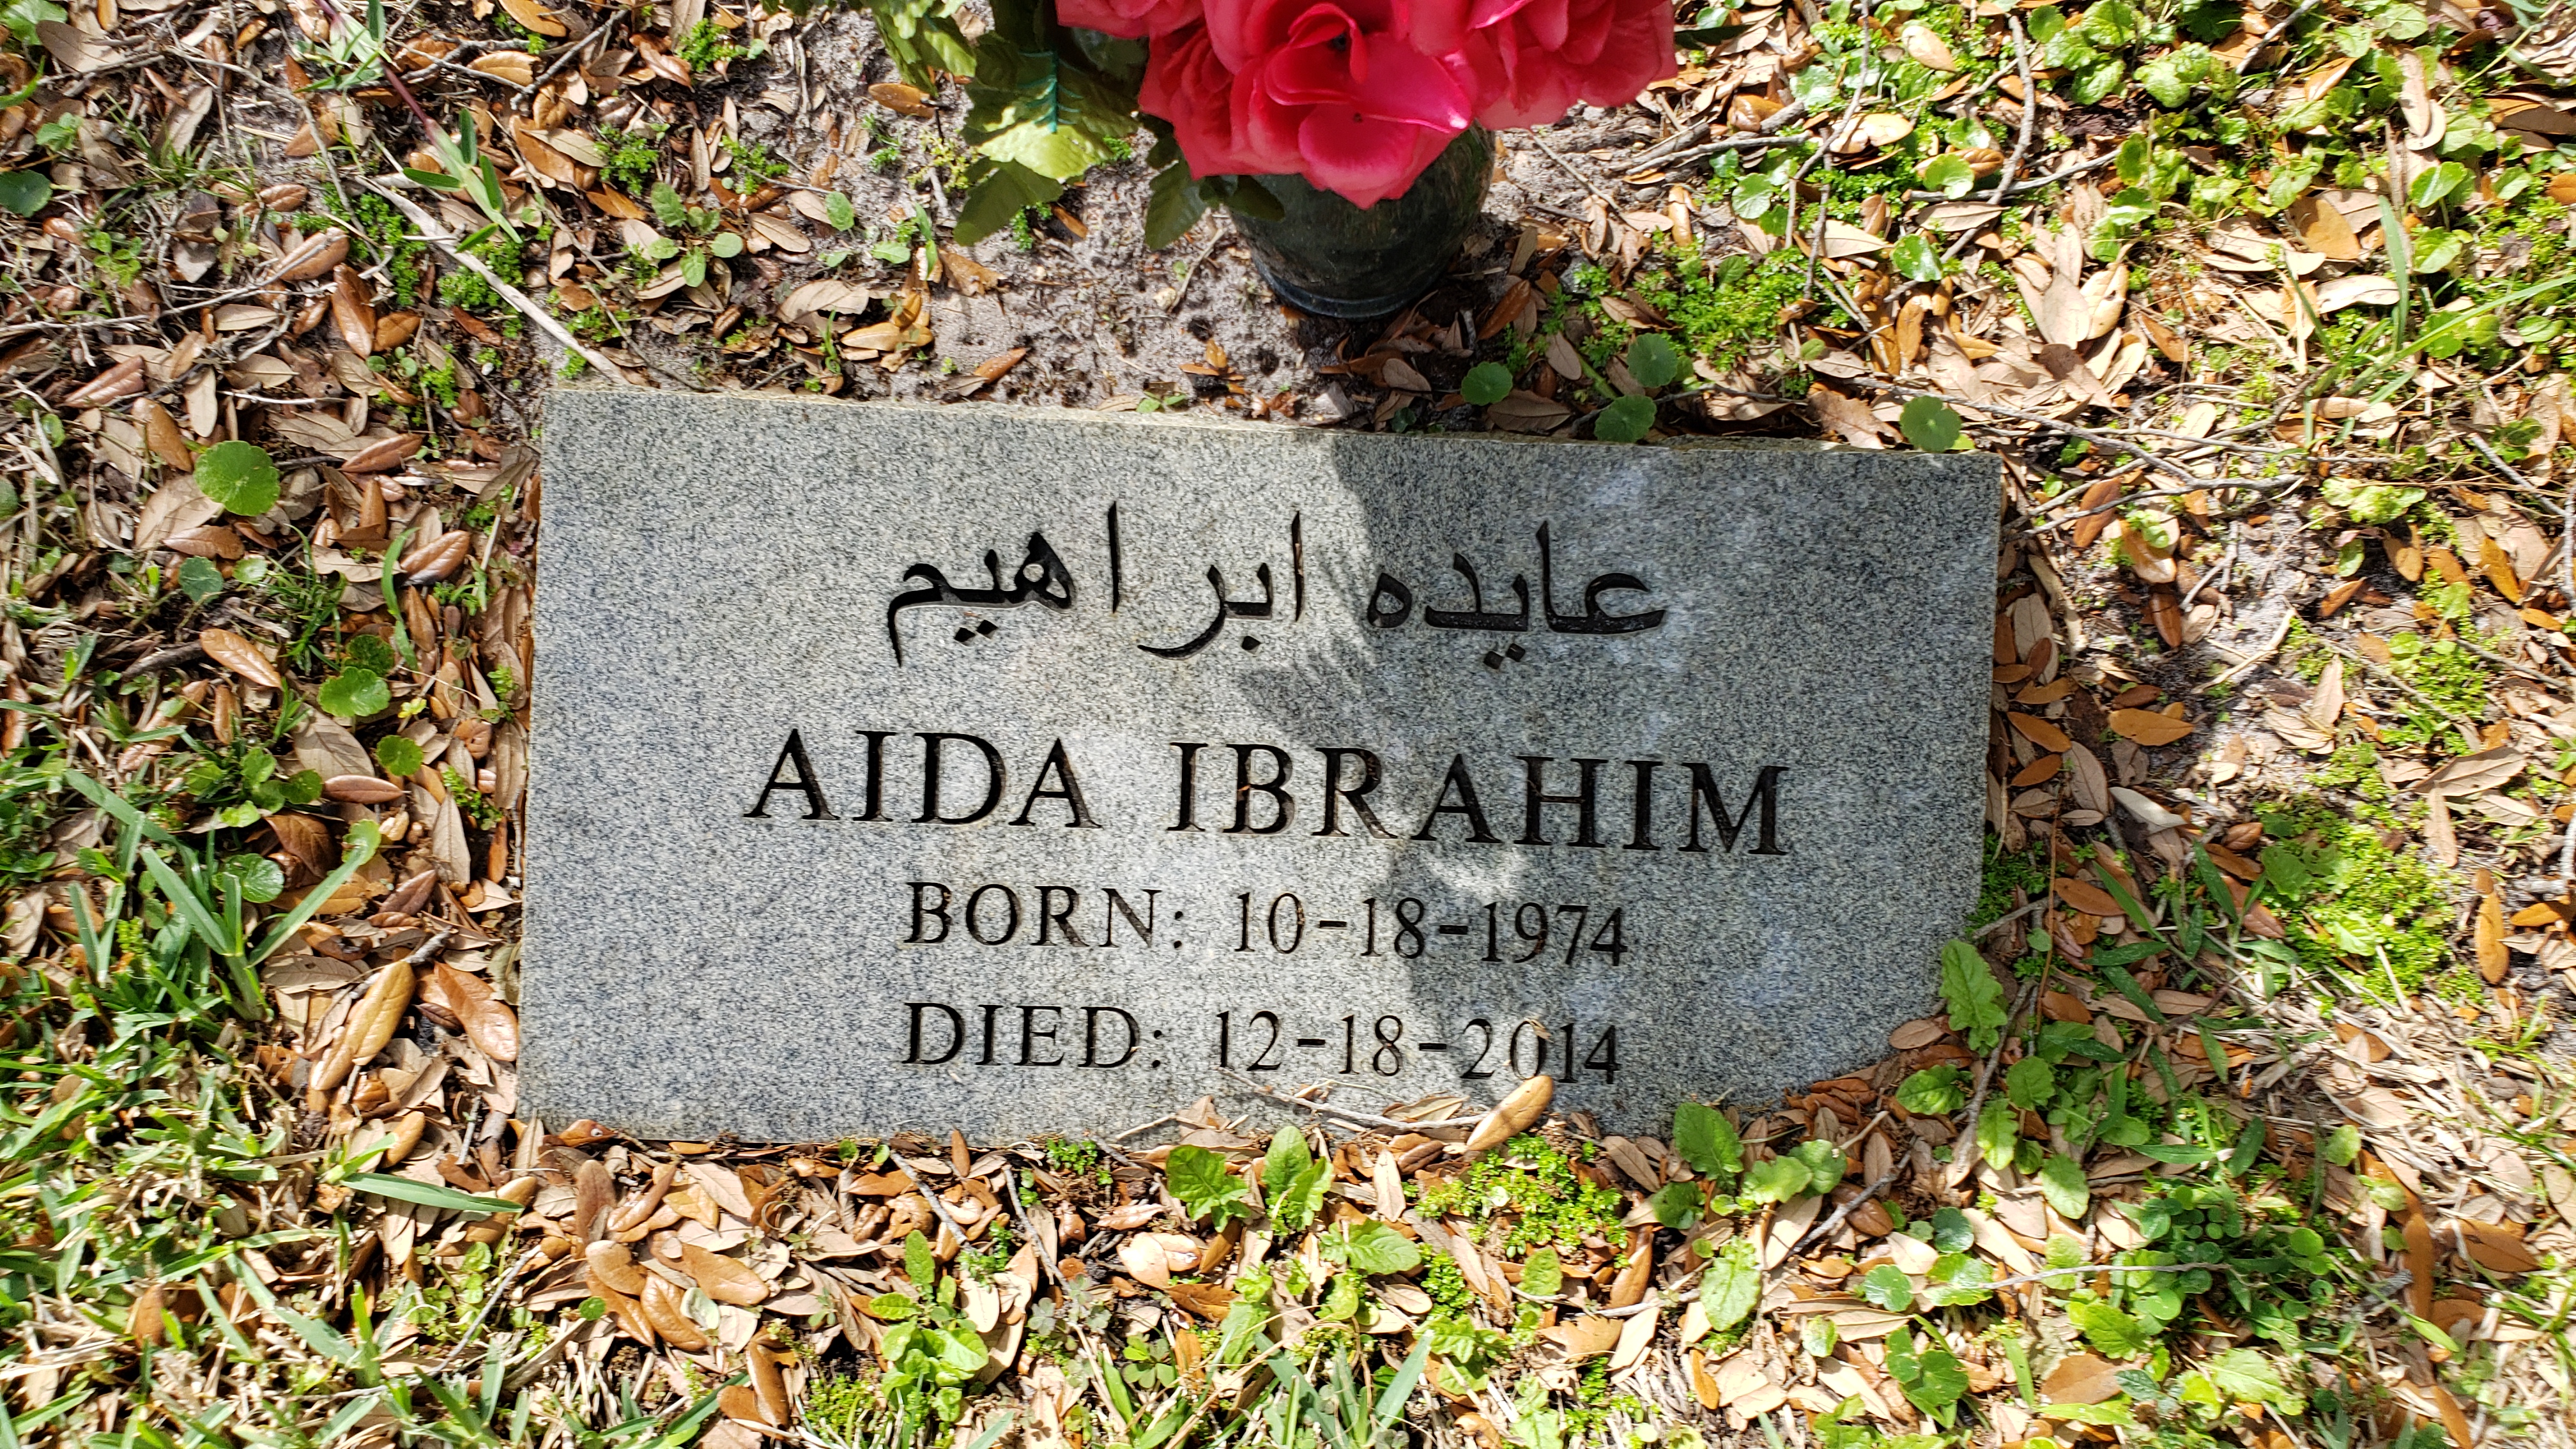 Aida Ibrahim